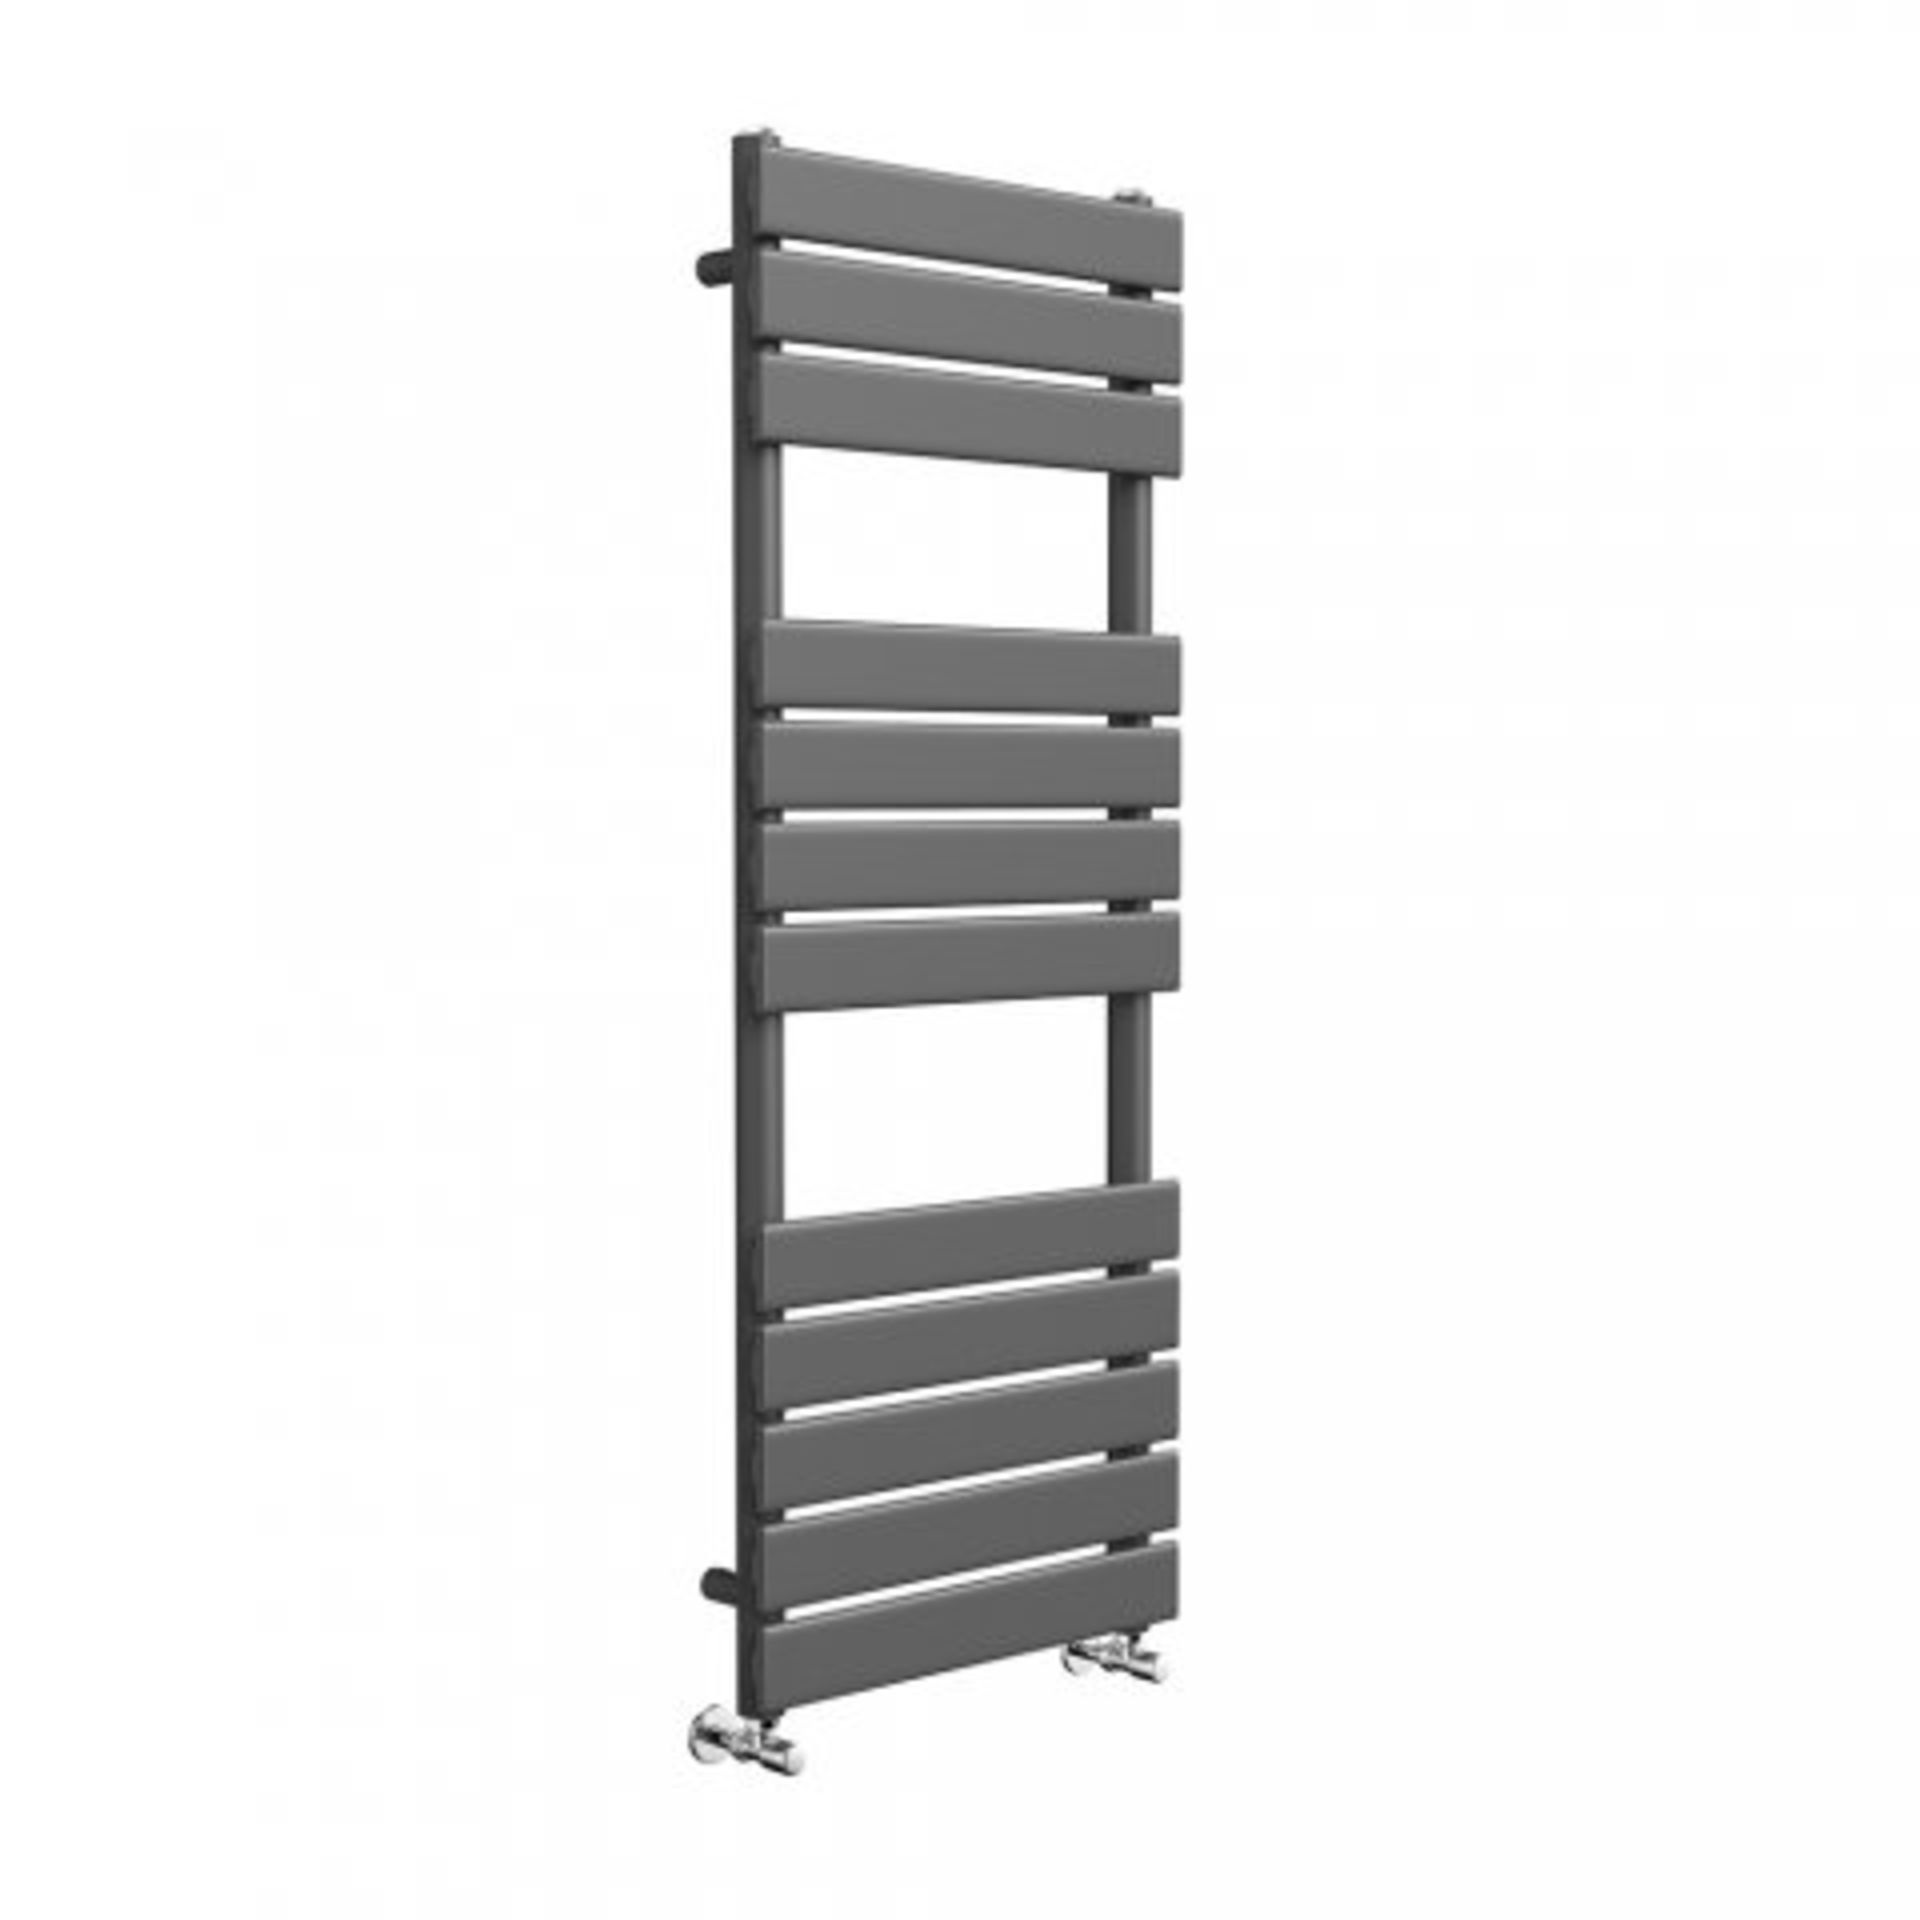 (L113) 1200x450mm Anthracite Flat Panel Ladder Towel Radiator - Francis Range. RRP £349.99. Heat - Image 2 of 3